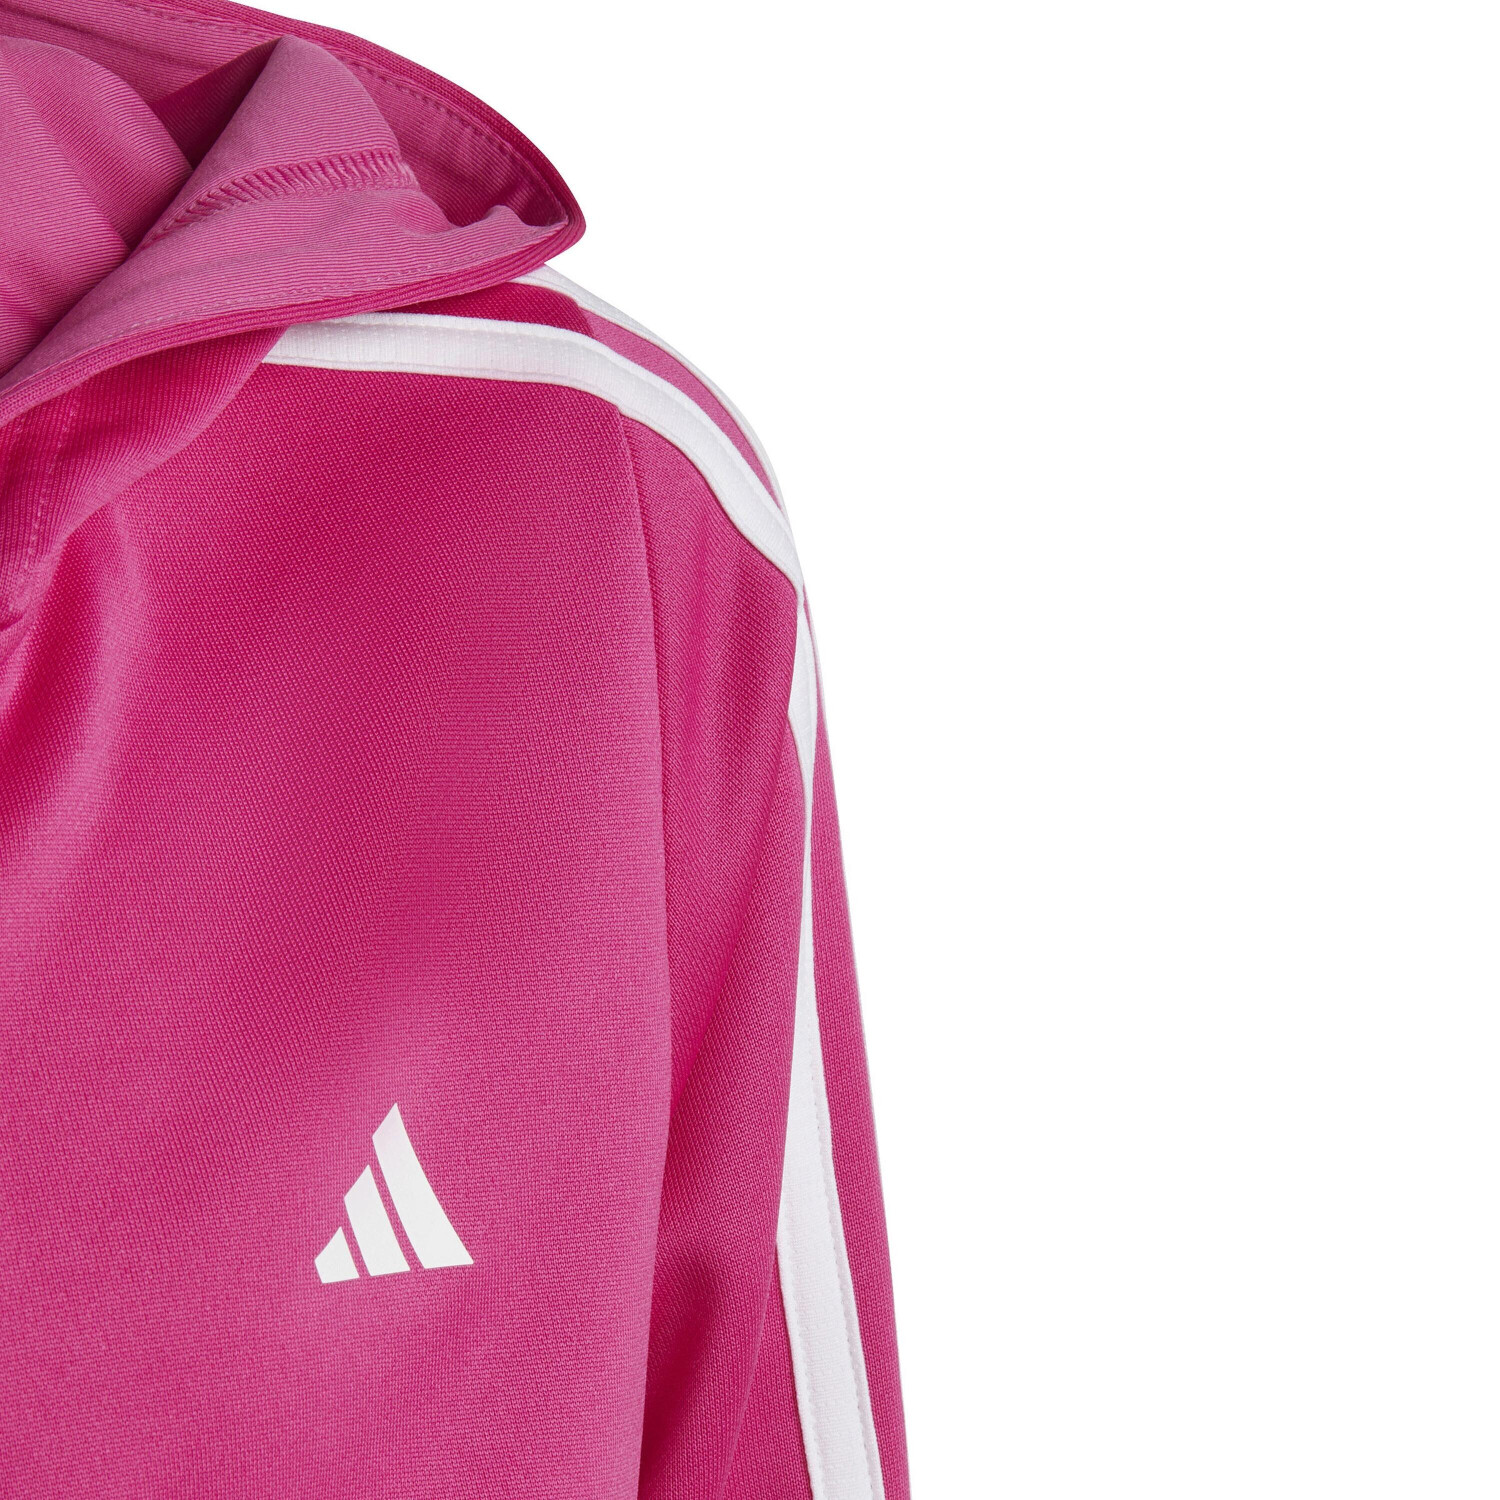 Adidas Girls Training Jacket bei 35,95 ab € (HR5793) fuchsia/white | Preisvergleich semi lucid